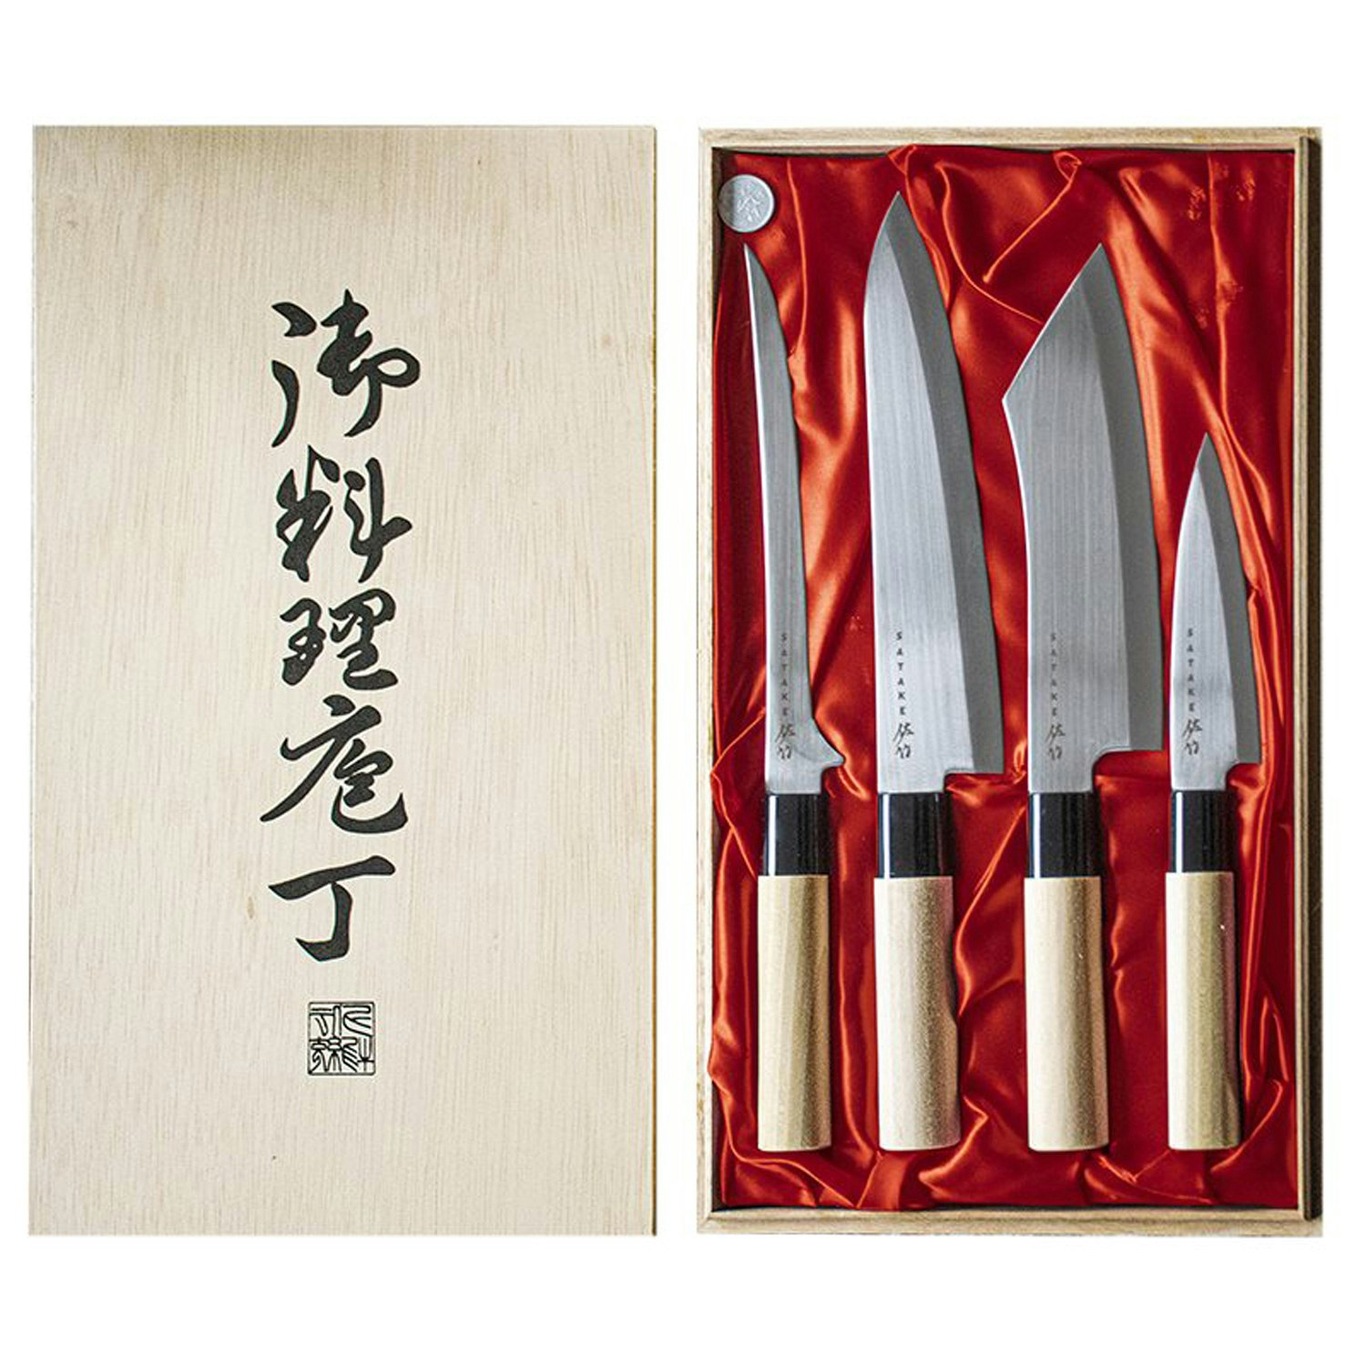 https://royaldesign.com/image/2/satake-houcho-knife-set-4-pack-0?w=800&quality=80